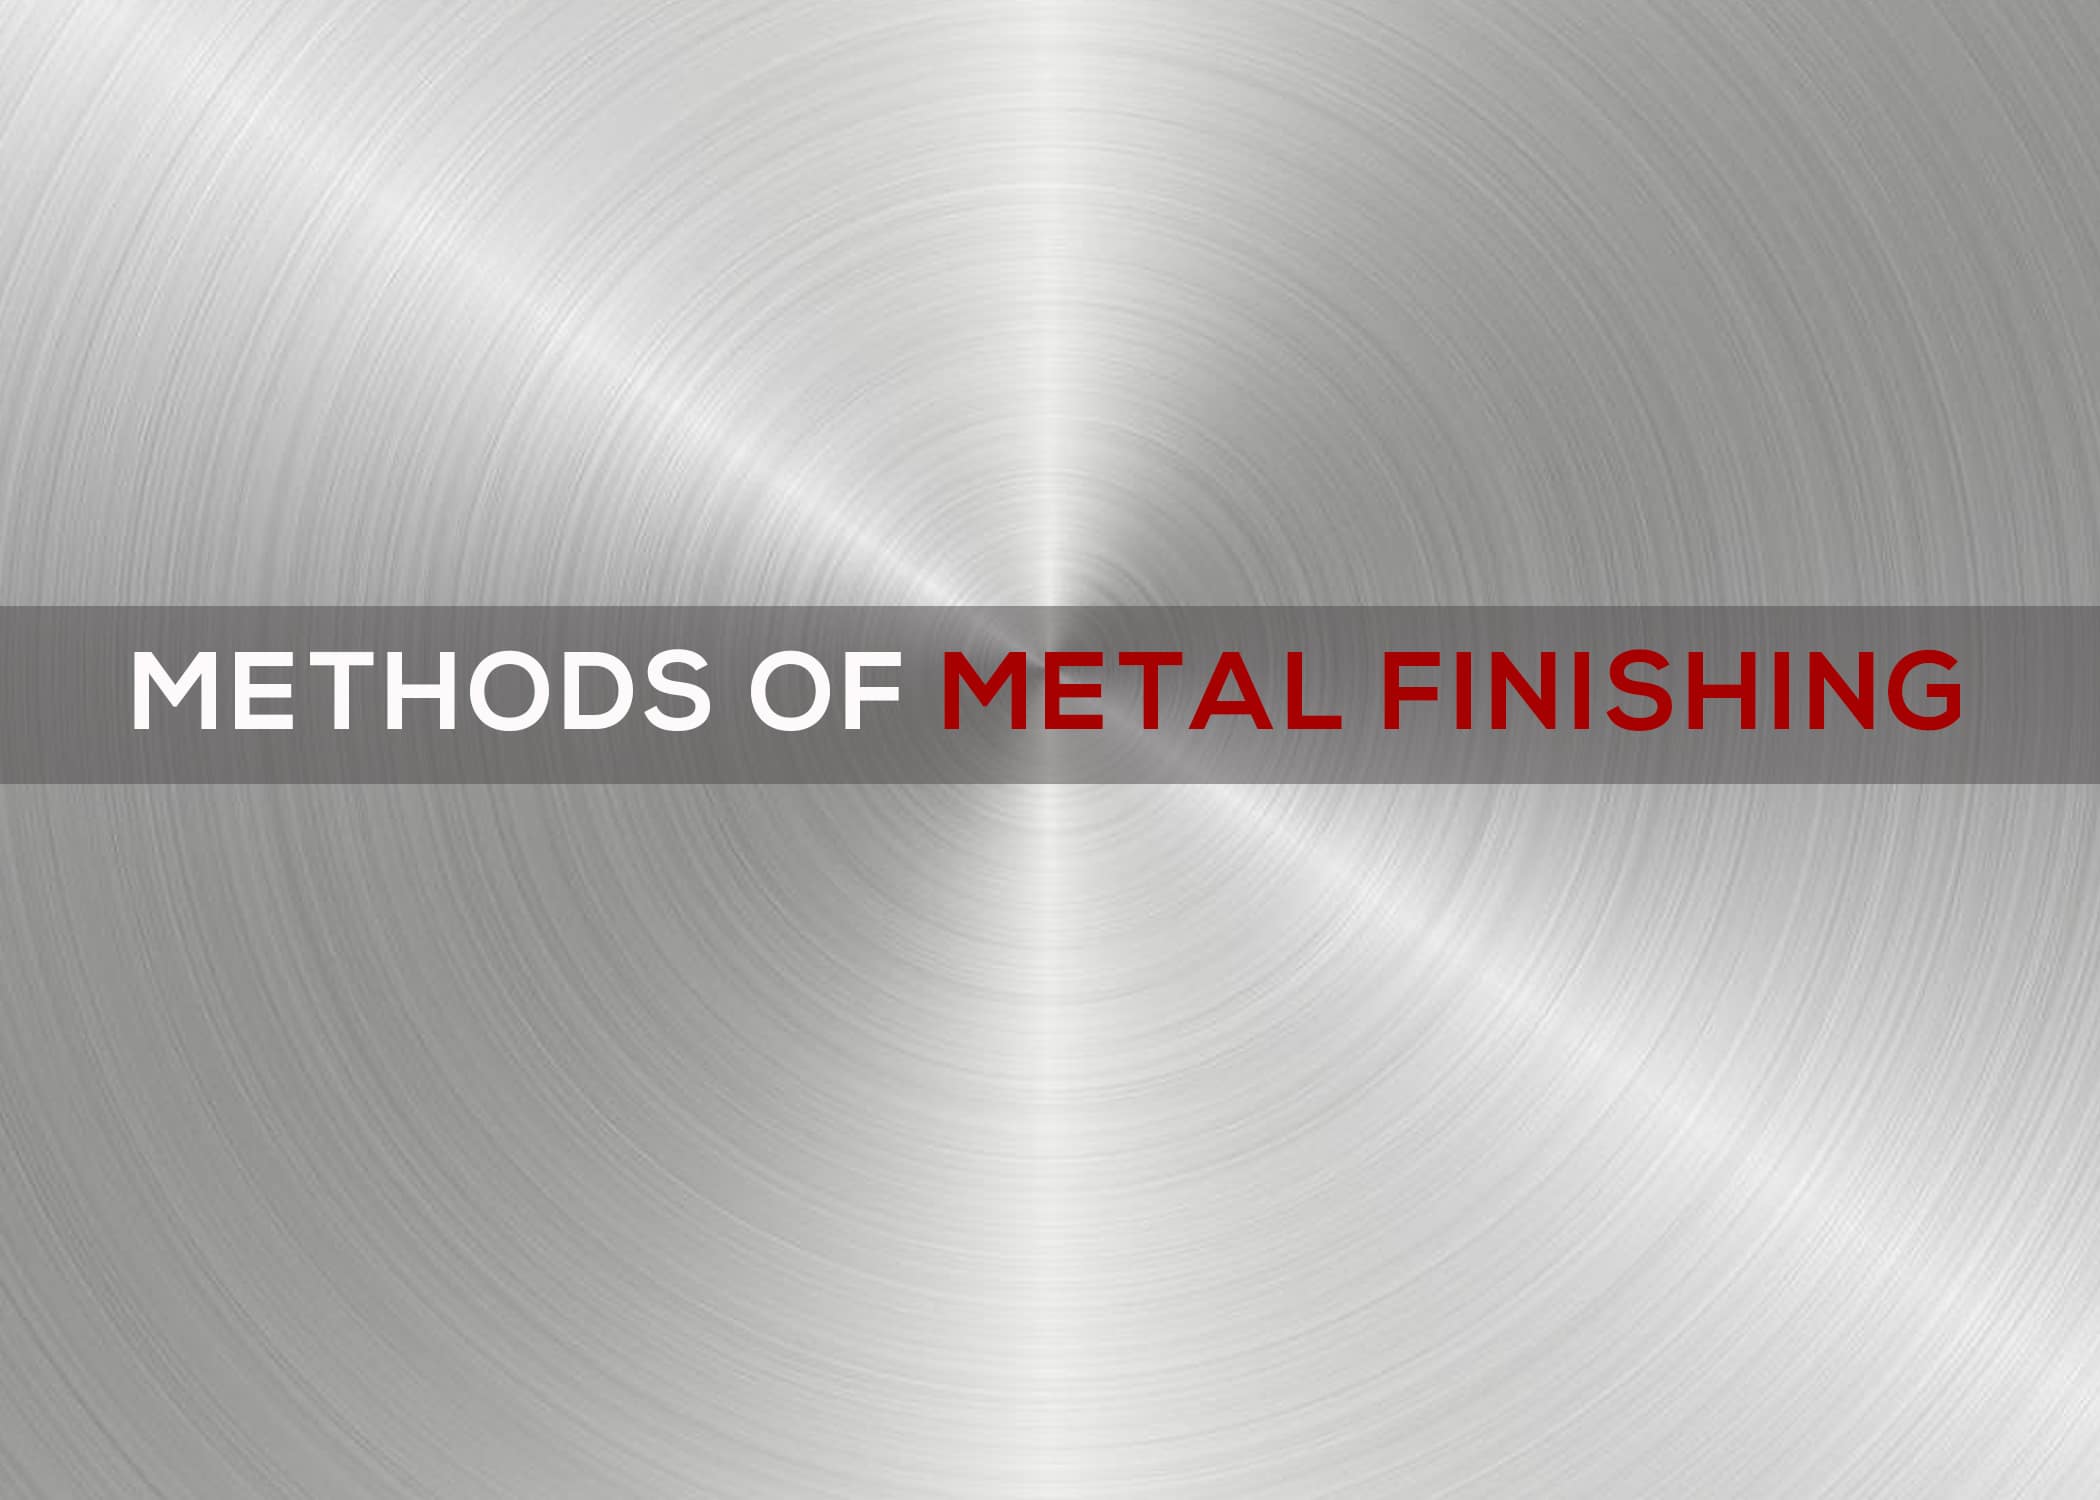 Methods of Metal Finishing